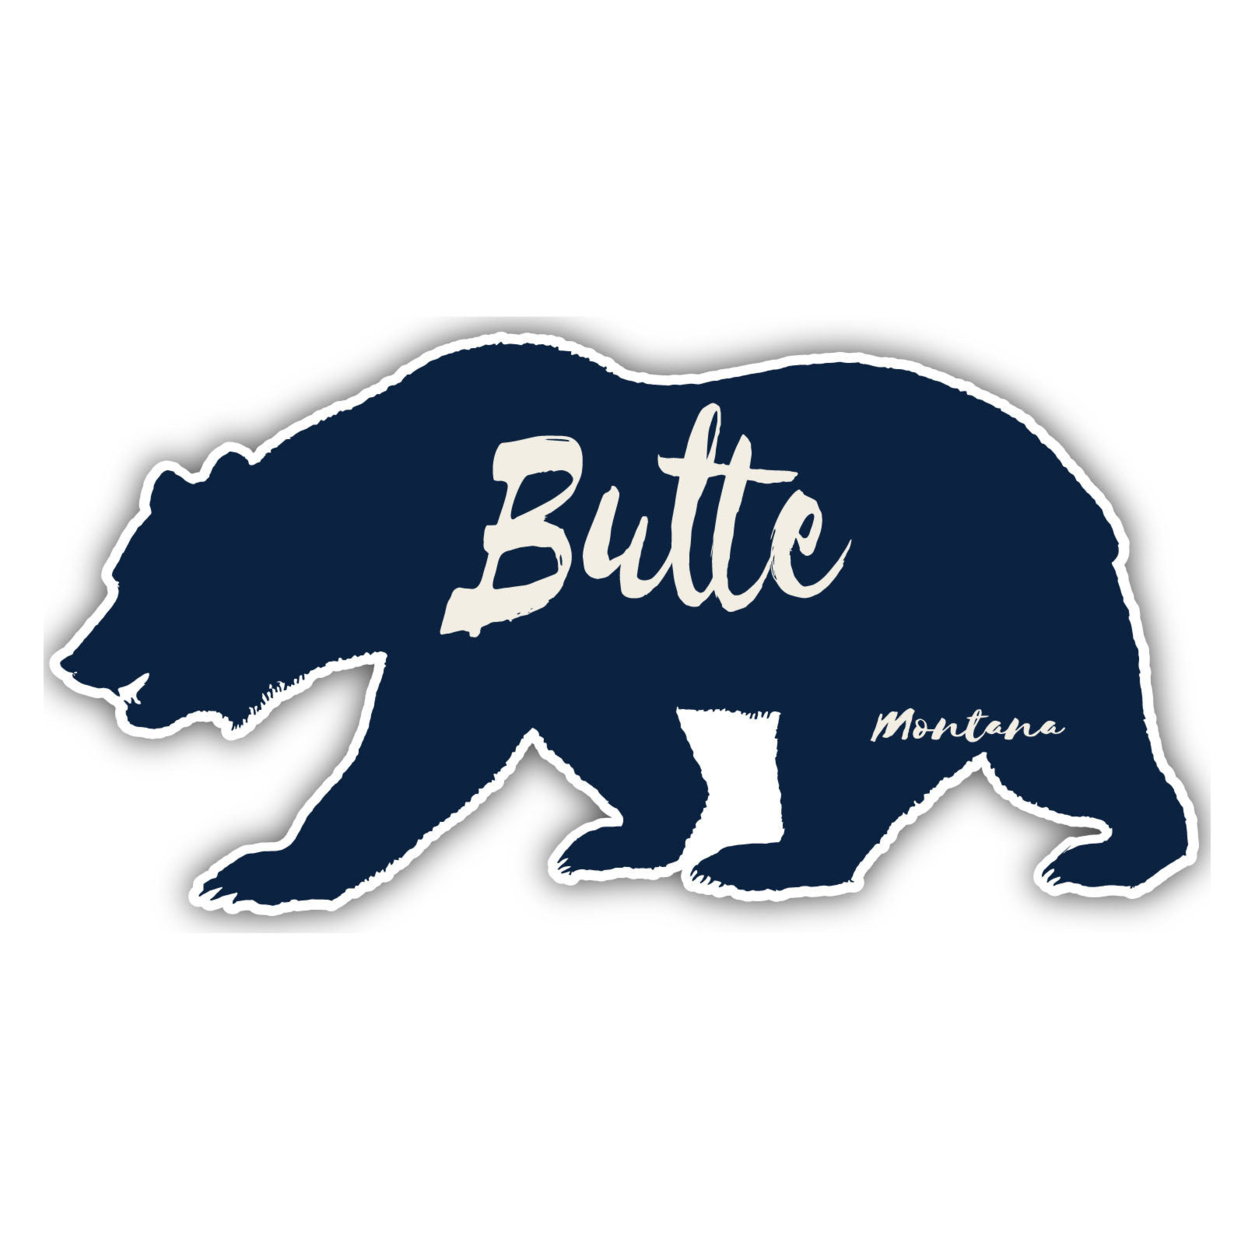 Butte Montana Souvenir Decorative Stickers (Choose Theme And Size) - Single Unit, 12-Inch, Camp Life